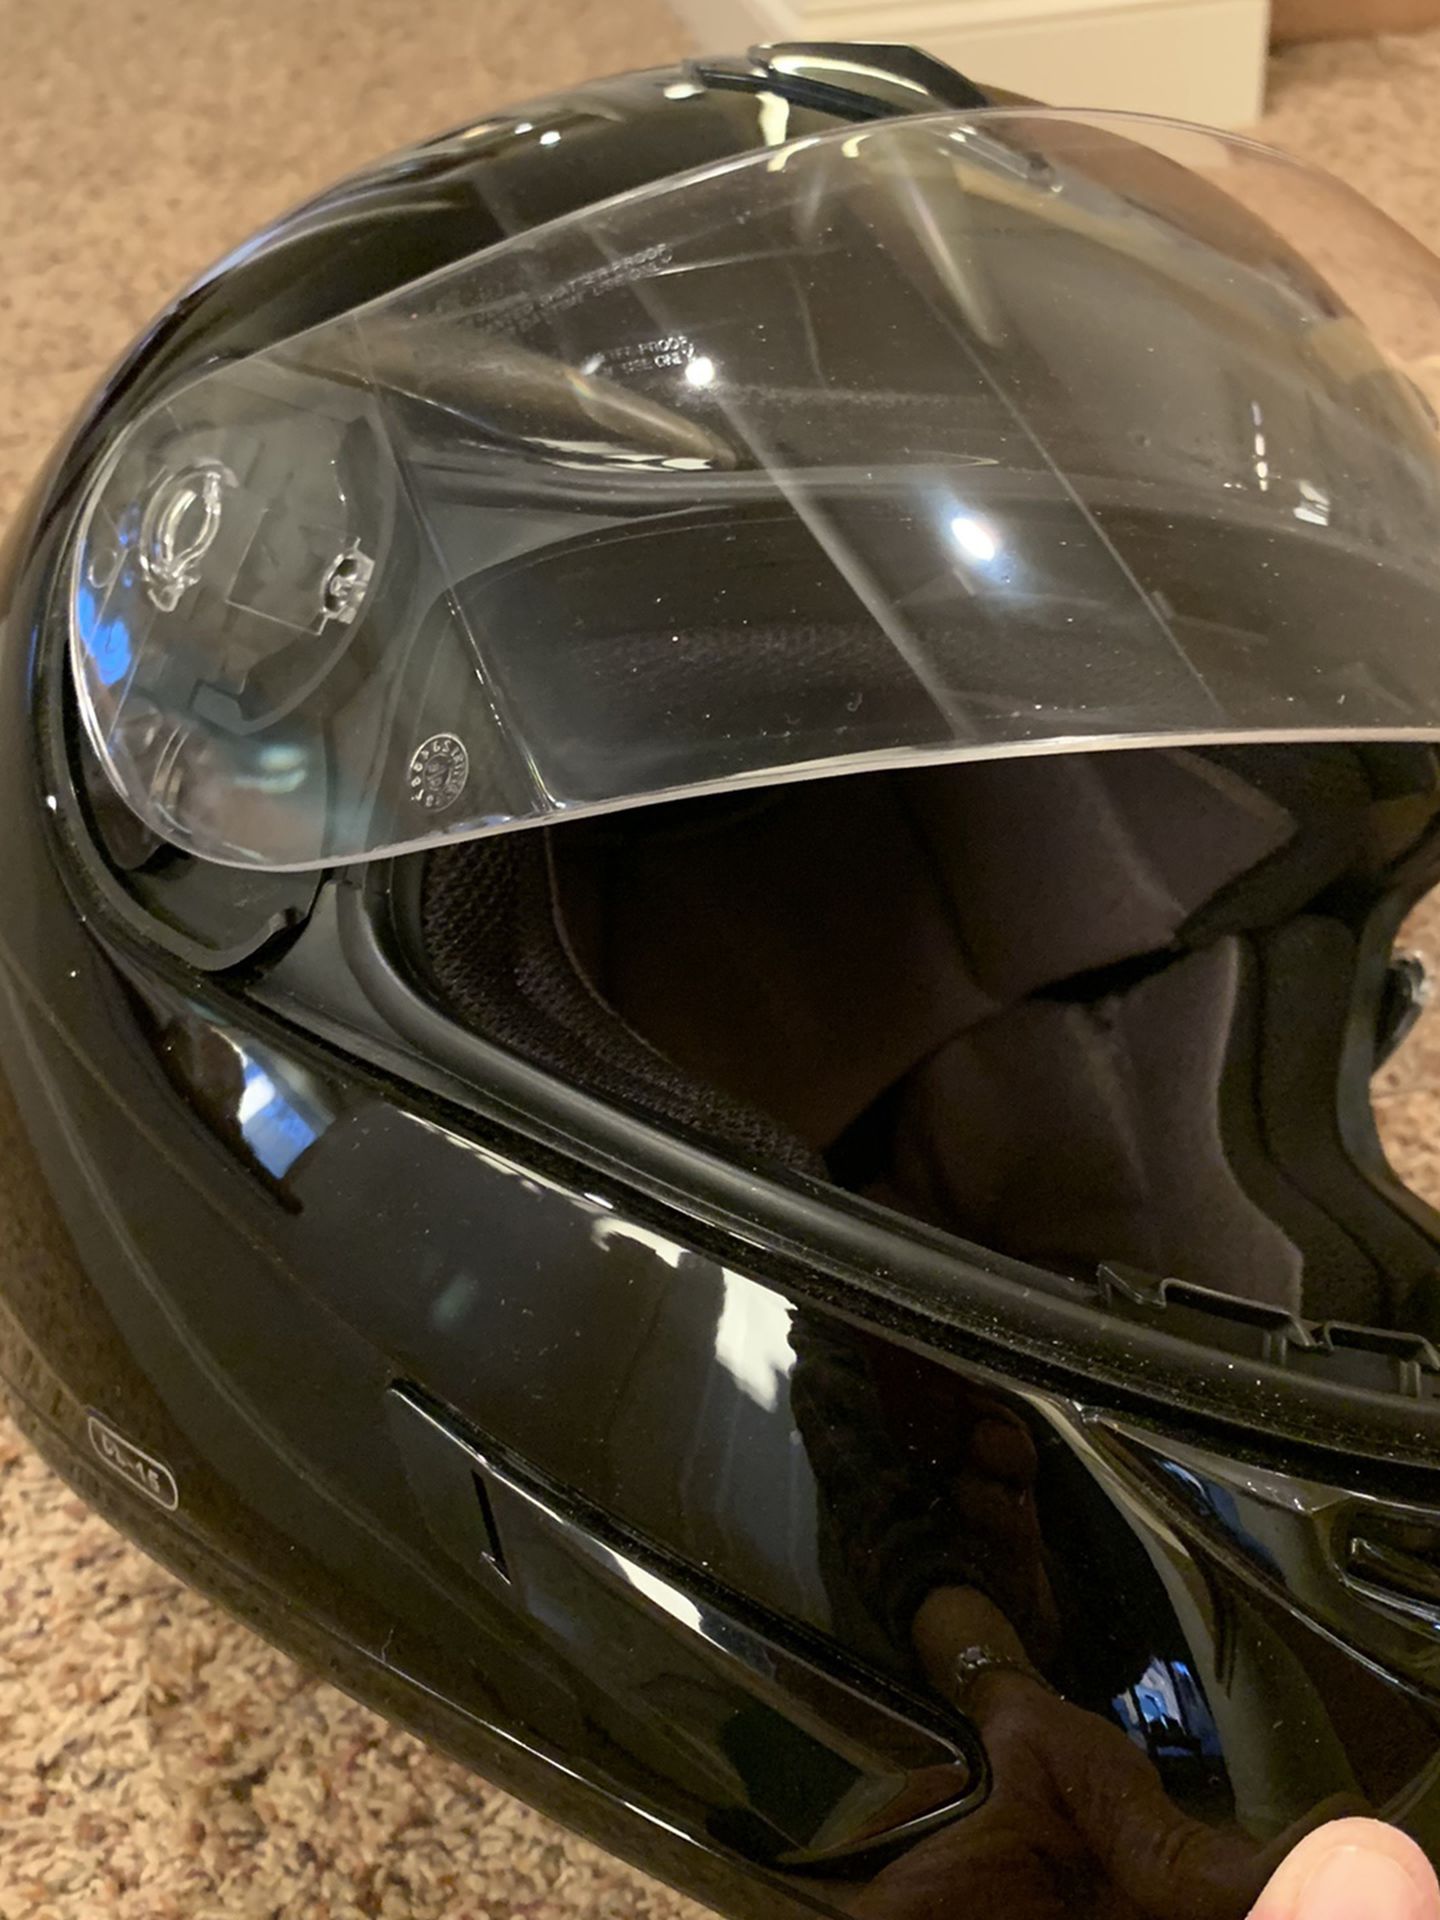 Snell DOT Approved Motorcycle Helmet - DL-15 Model - Like New